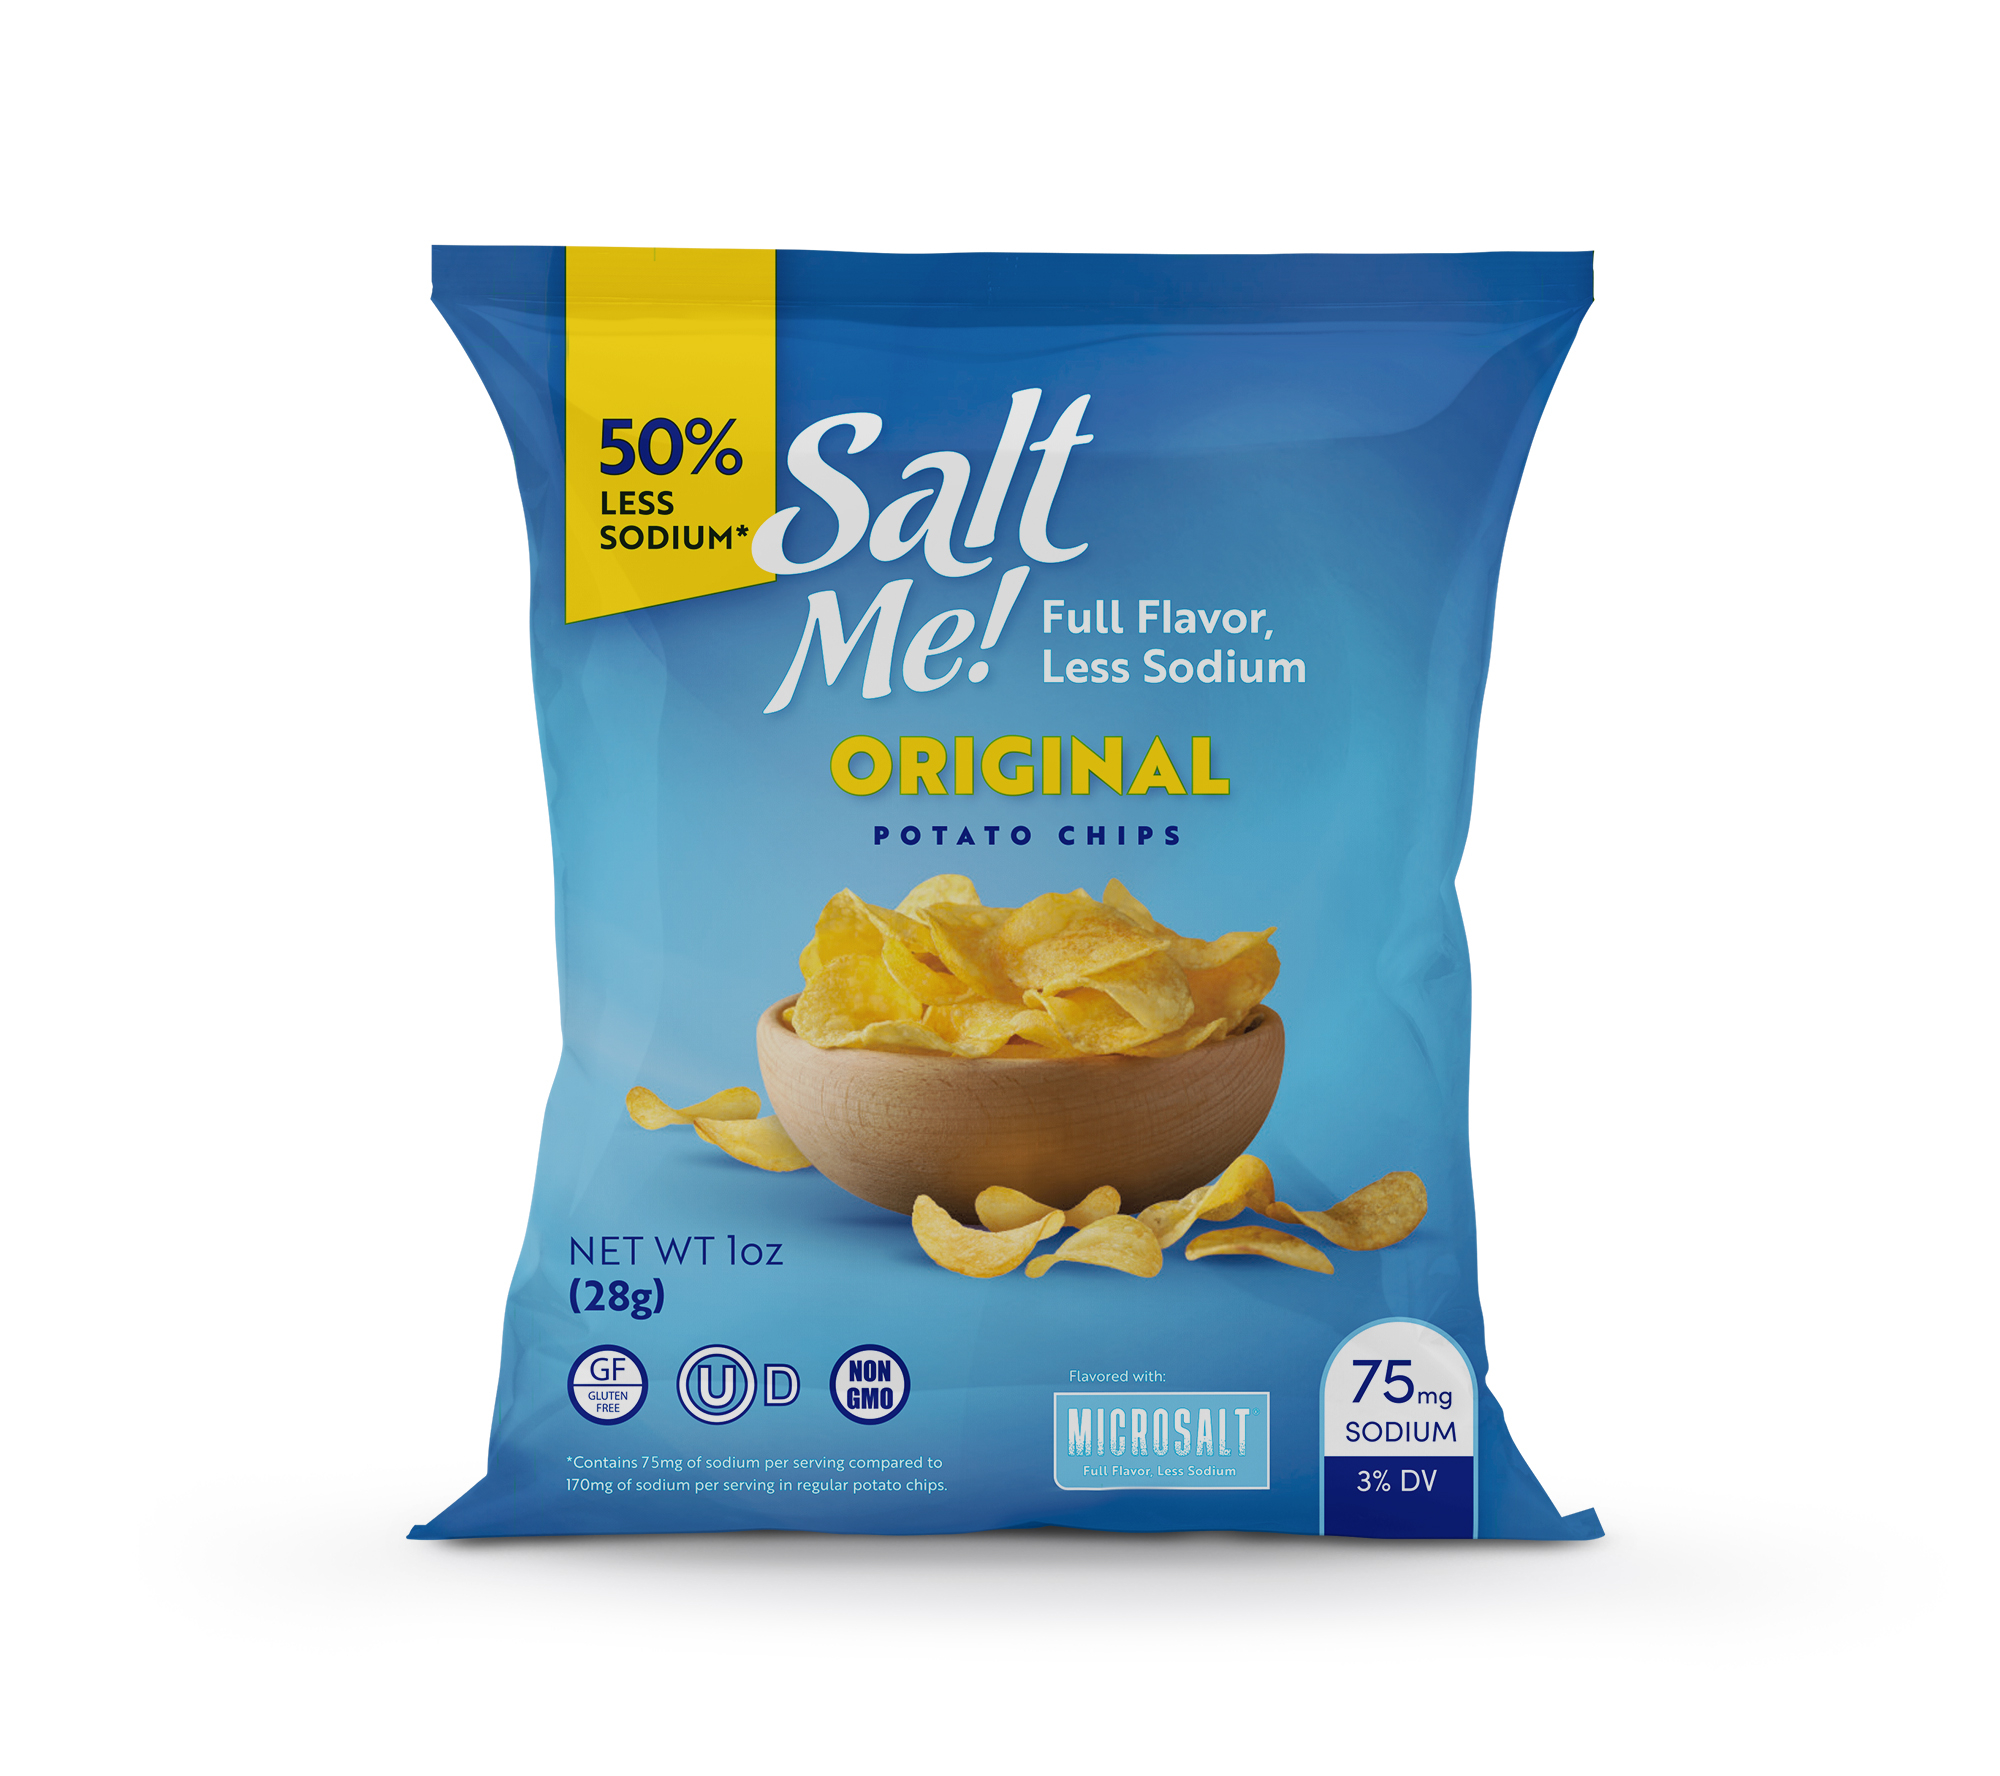 MicroSalt to distribute SaltMe! at Kroger